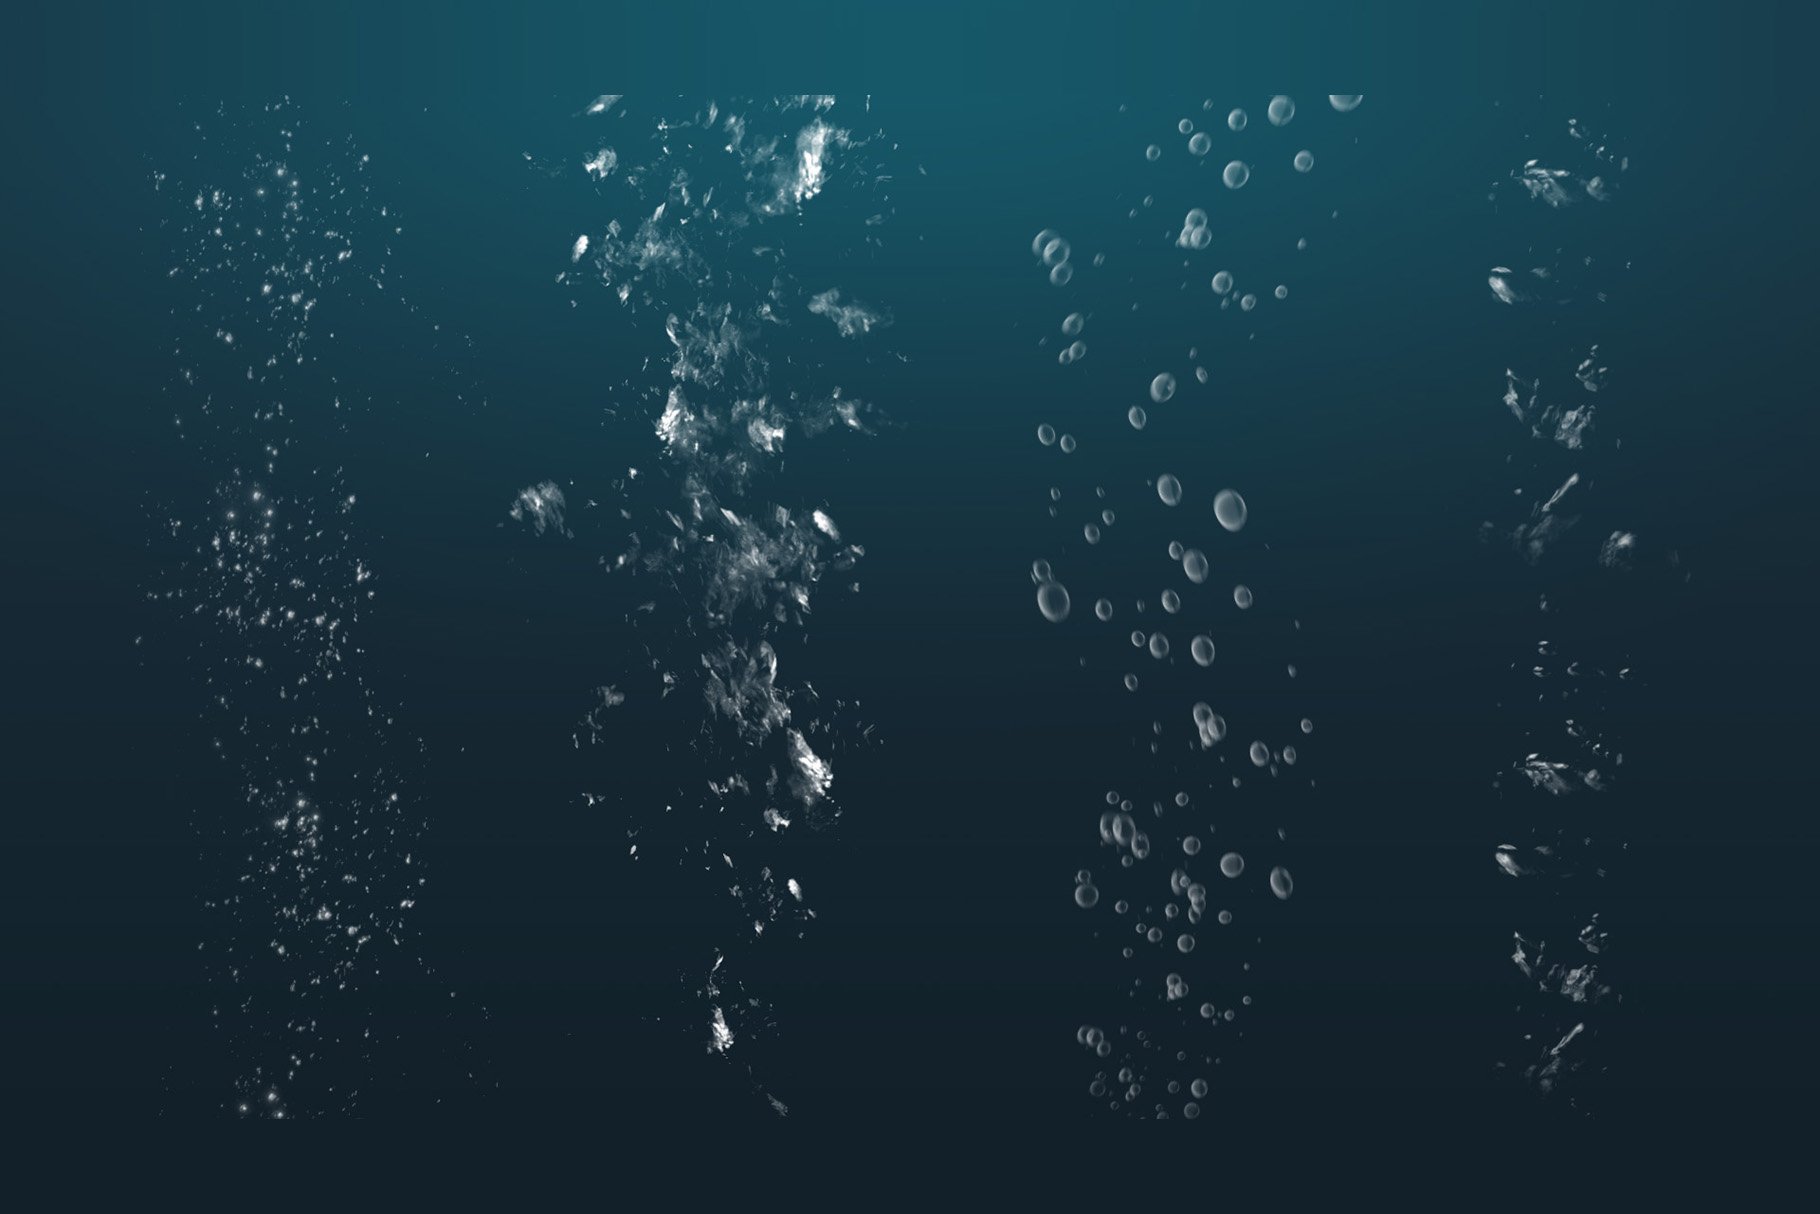 Underwater Brush setpreview image.